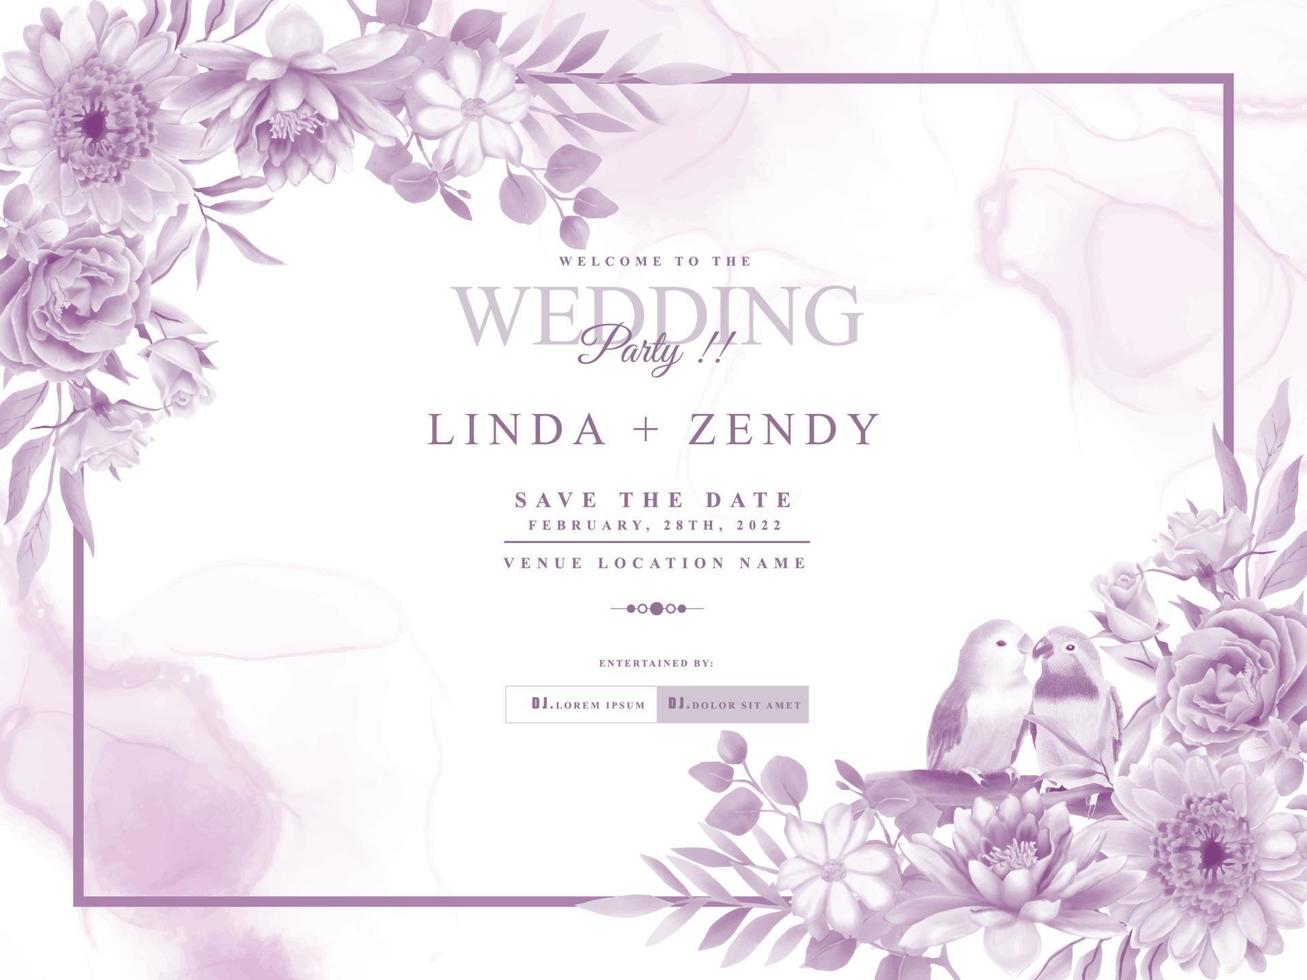 plantilla de invitación de boda floral púrpura vector